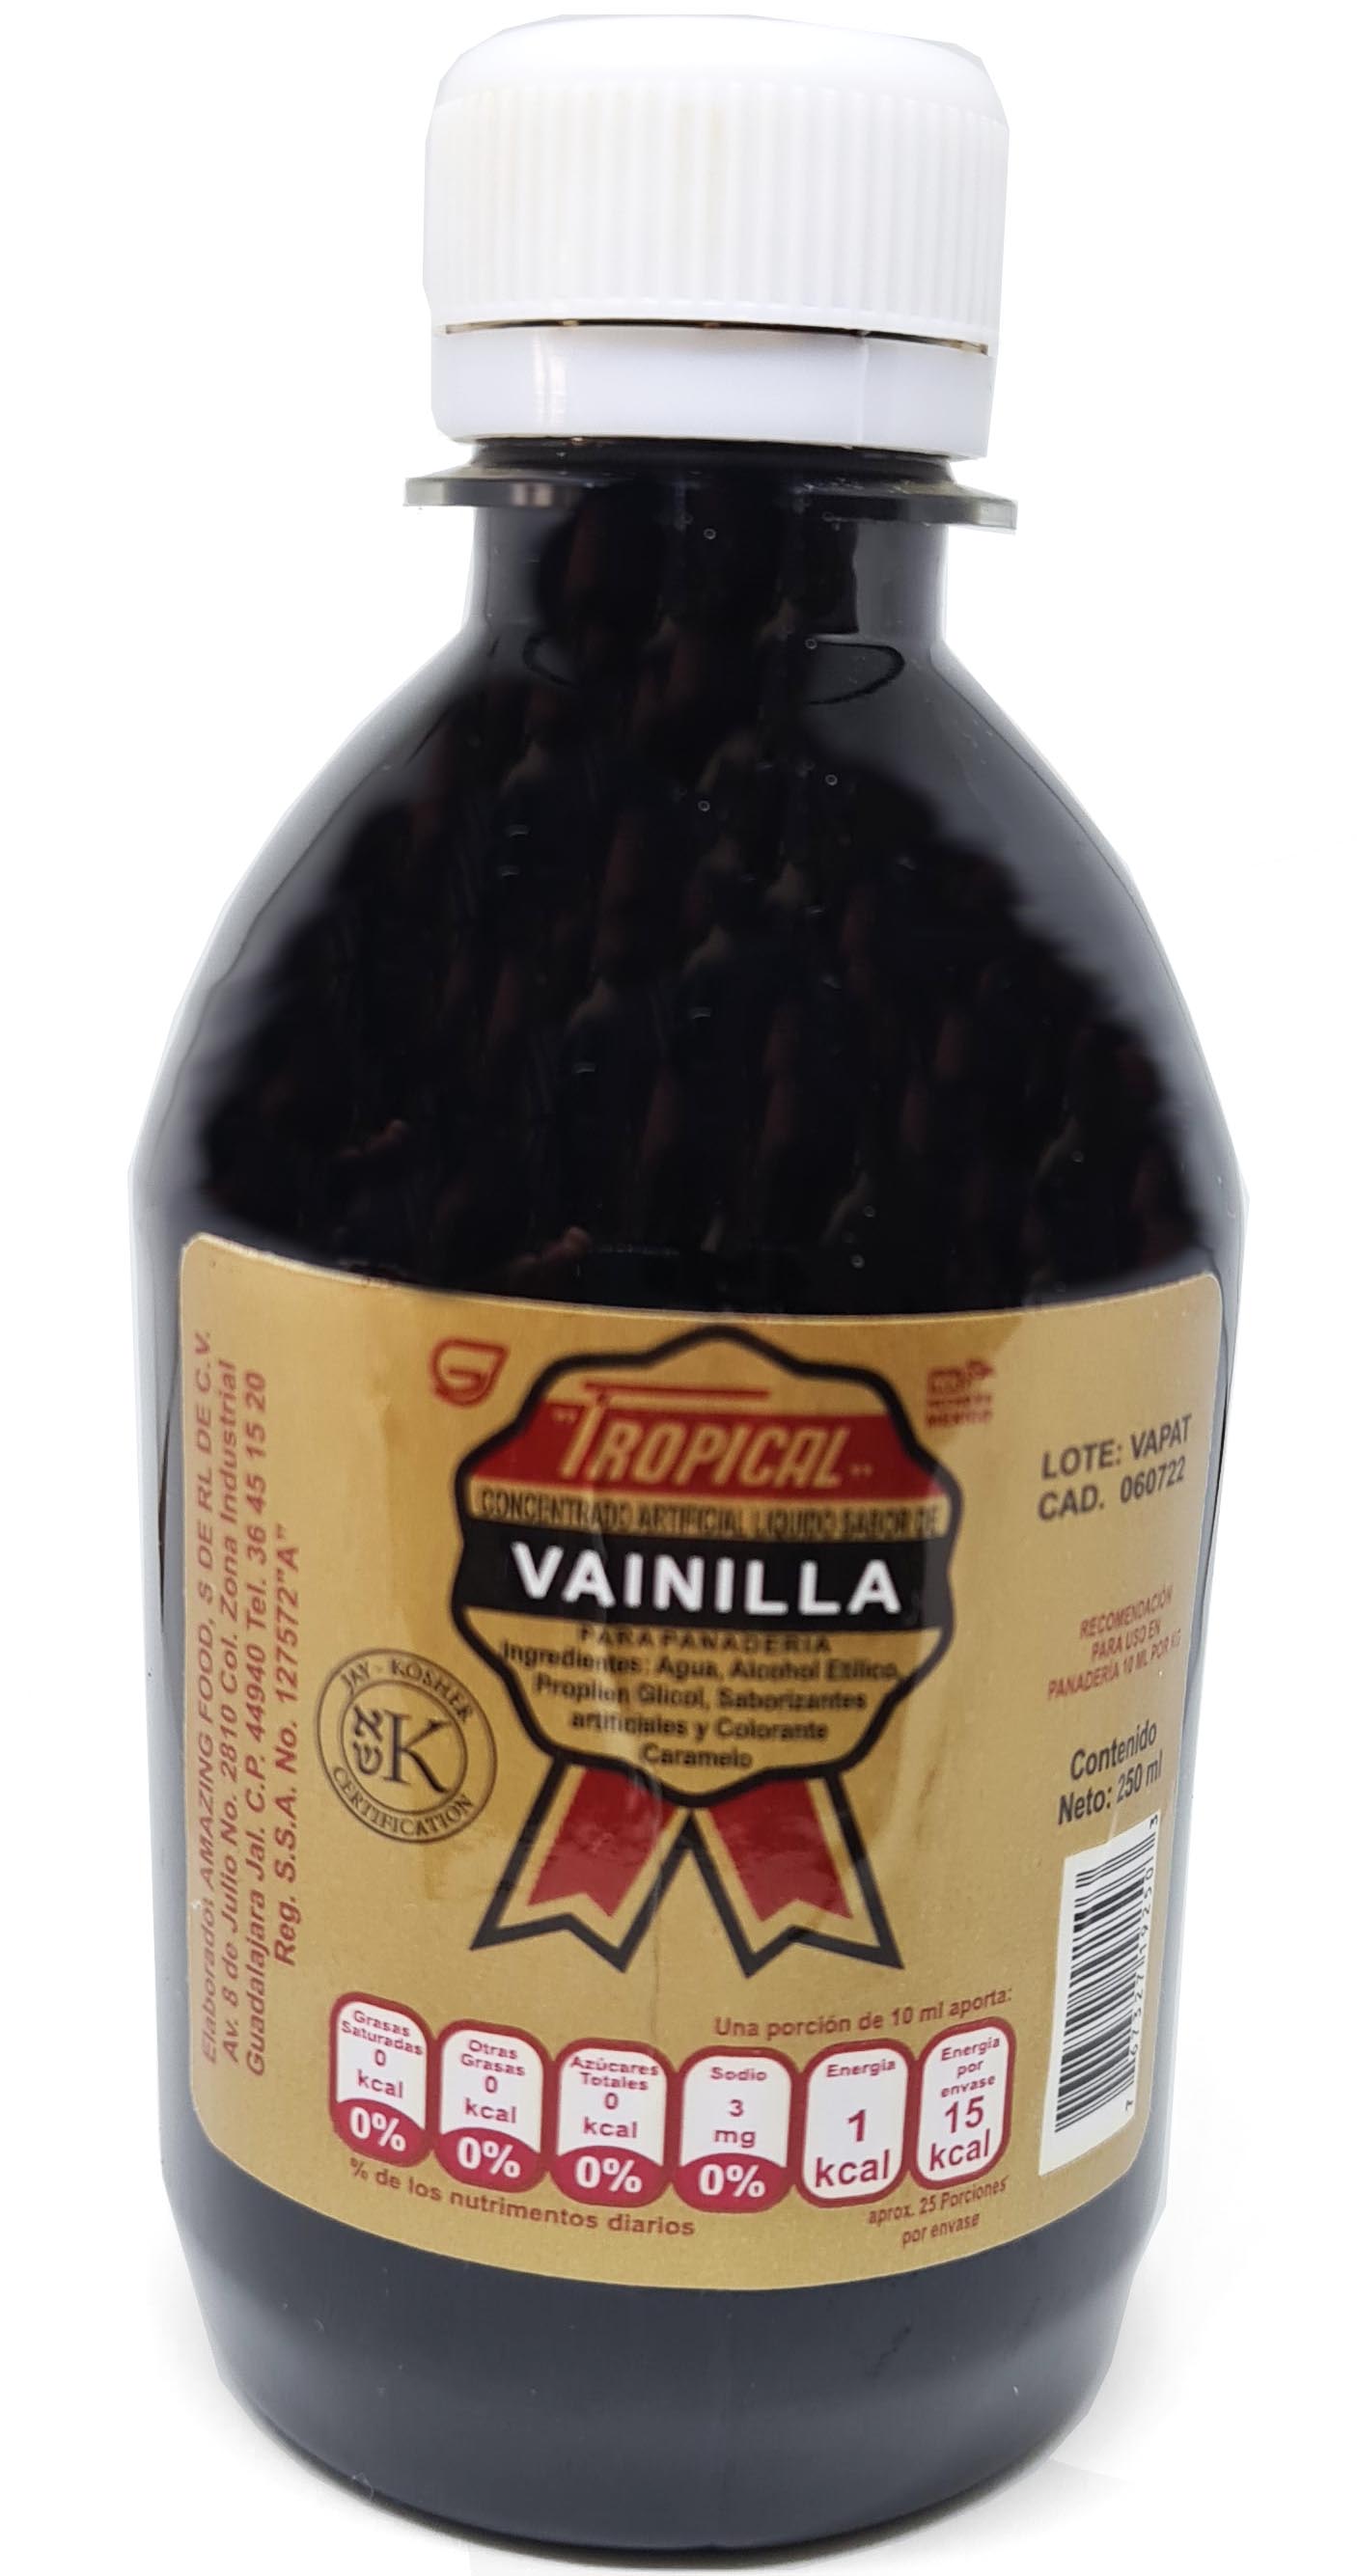 Mexican Vanilla aroma 250g